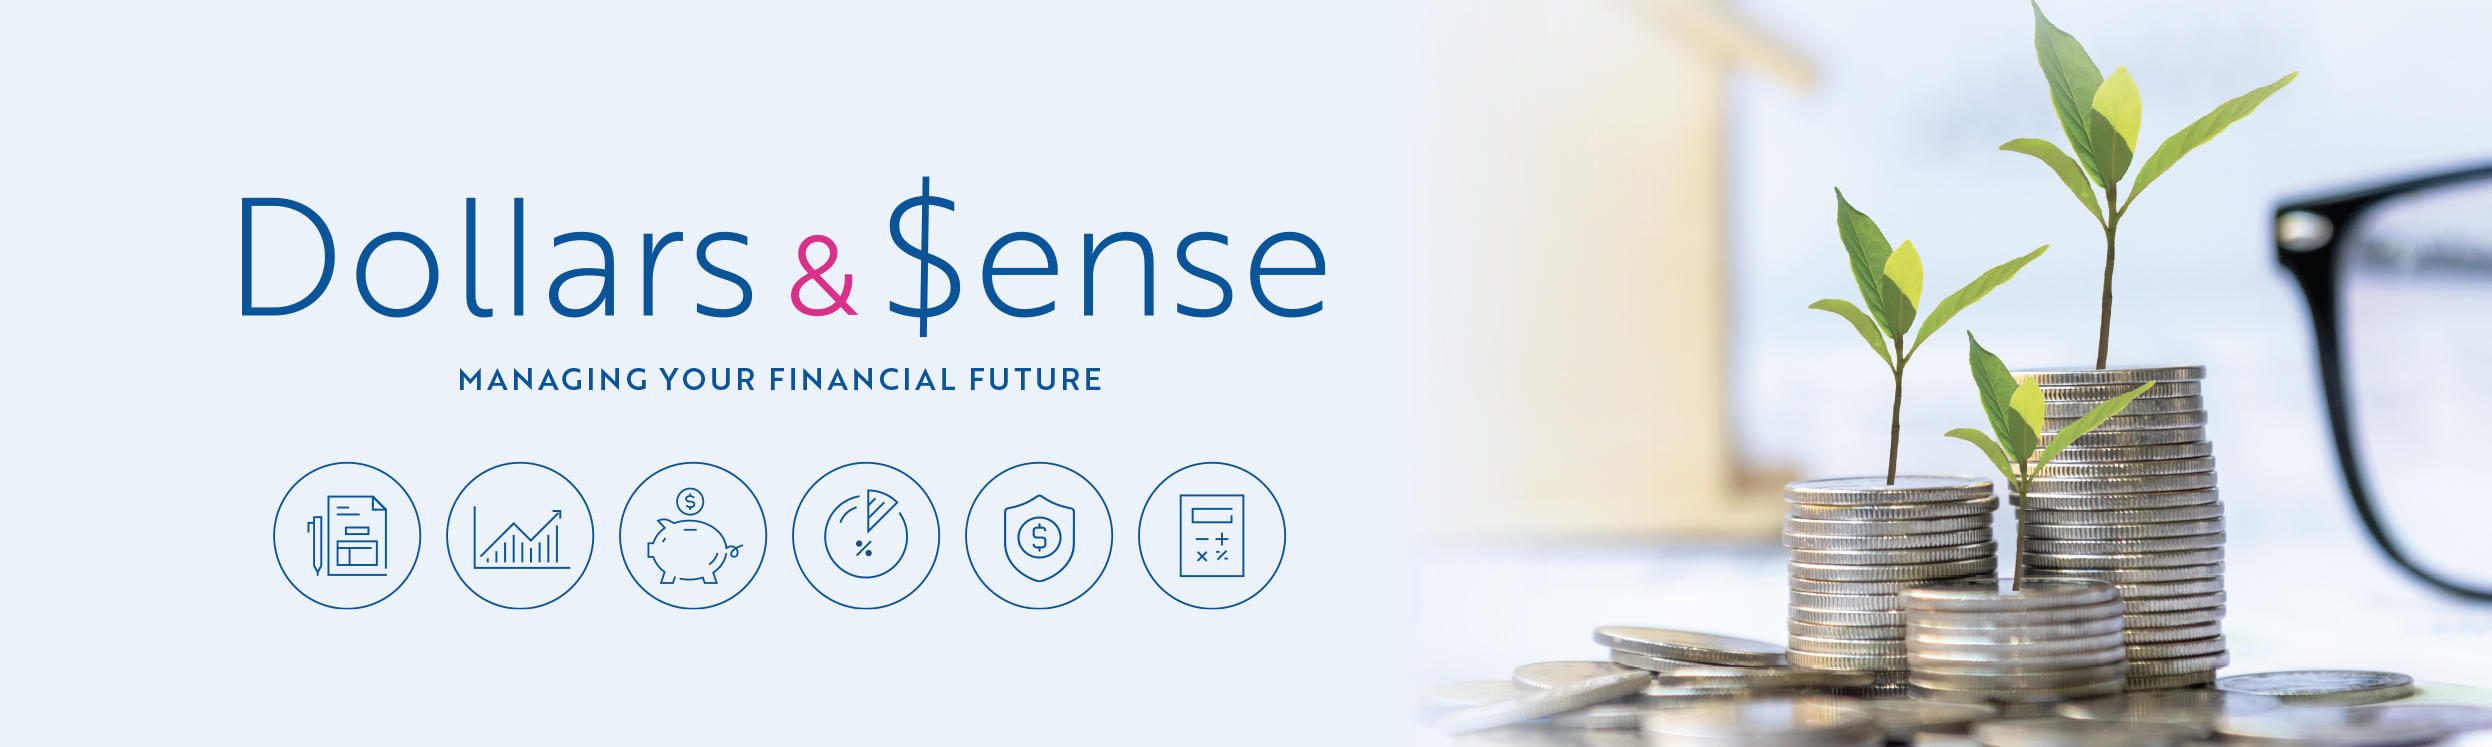 Dollars + Sense Financial Management Series